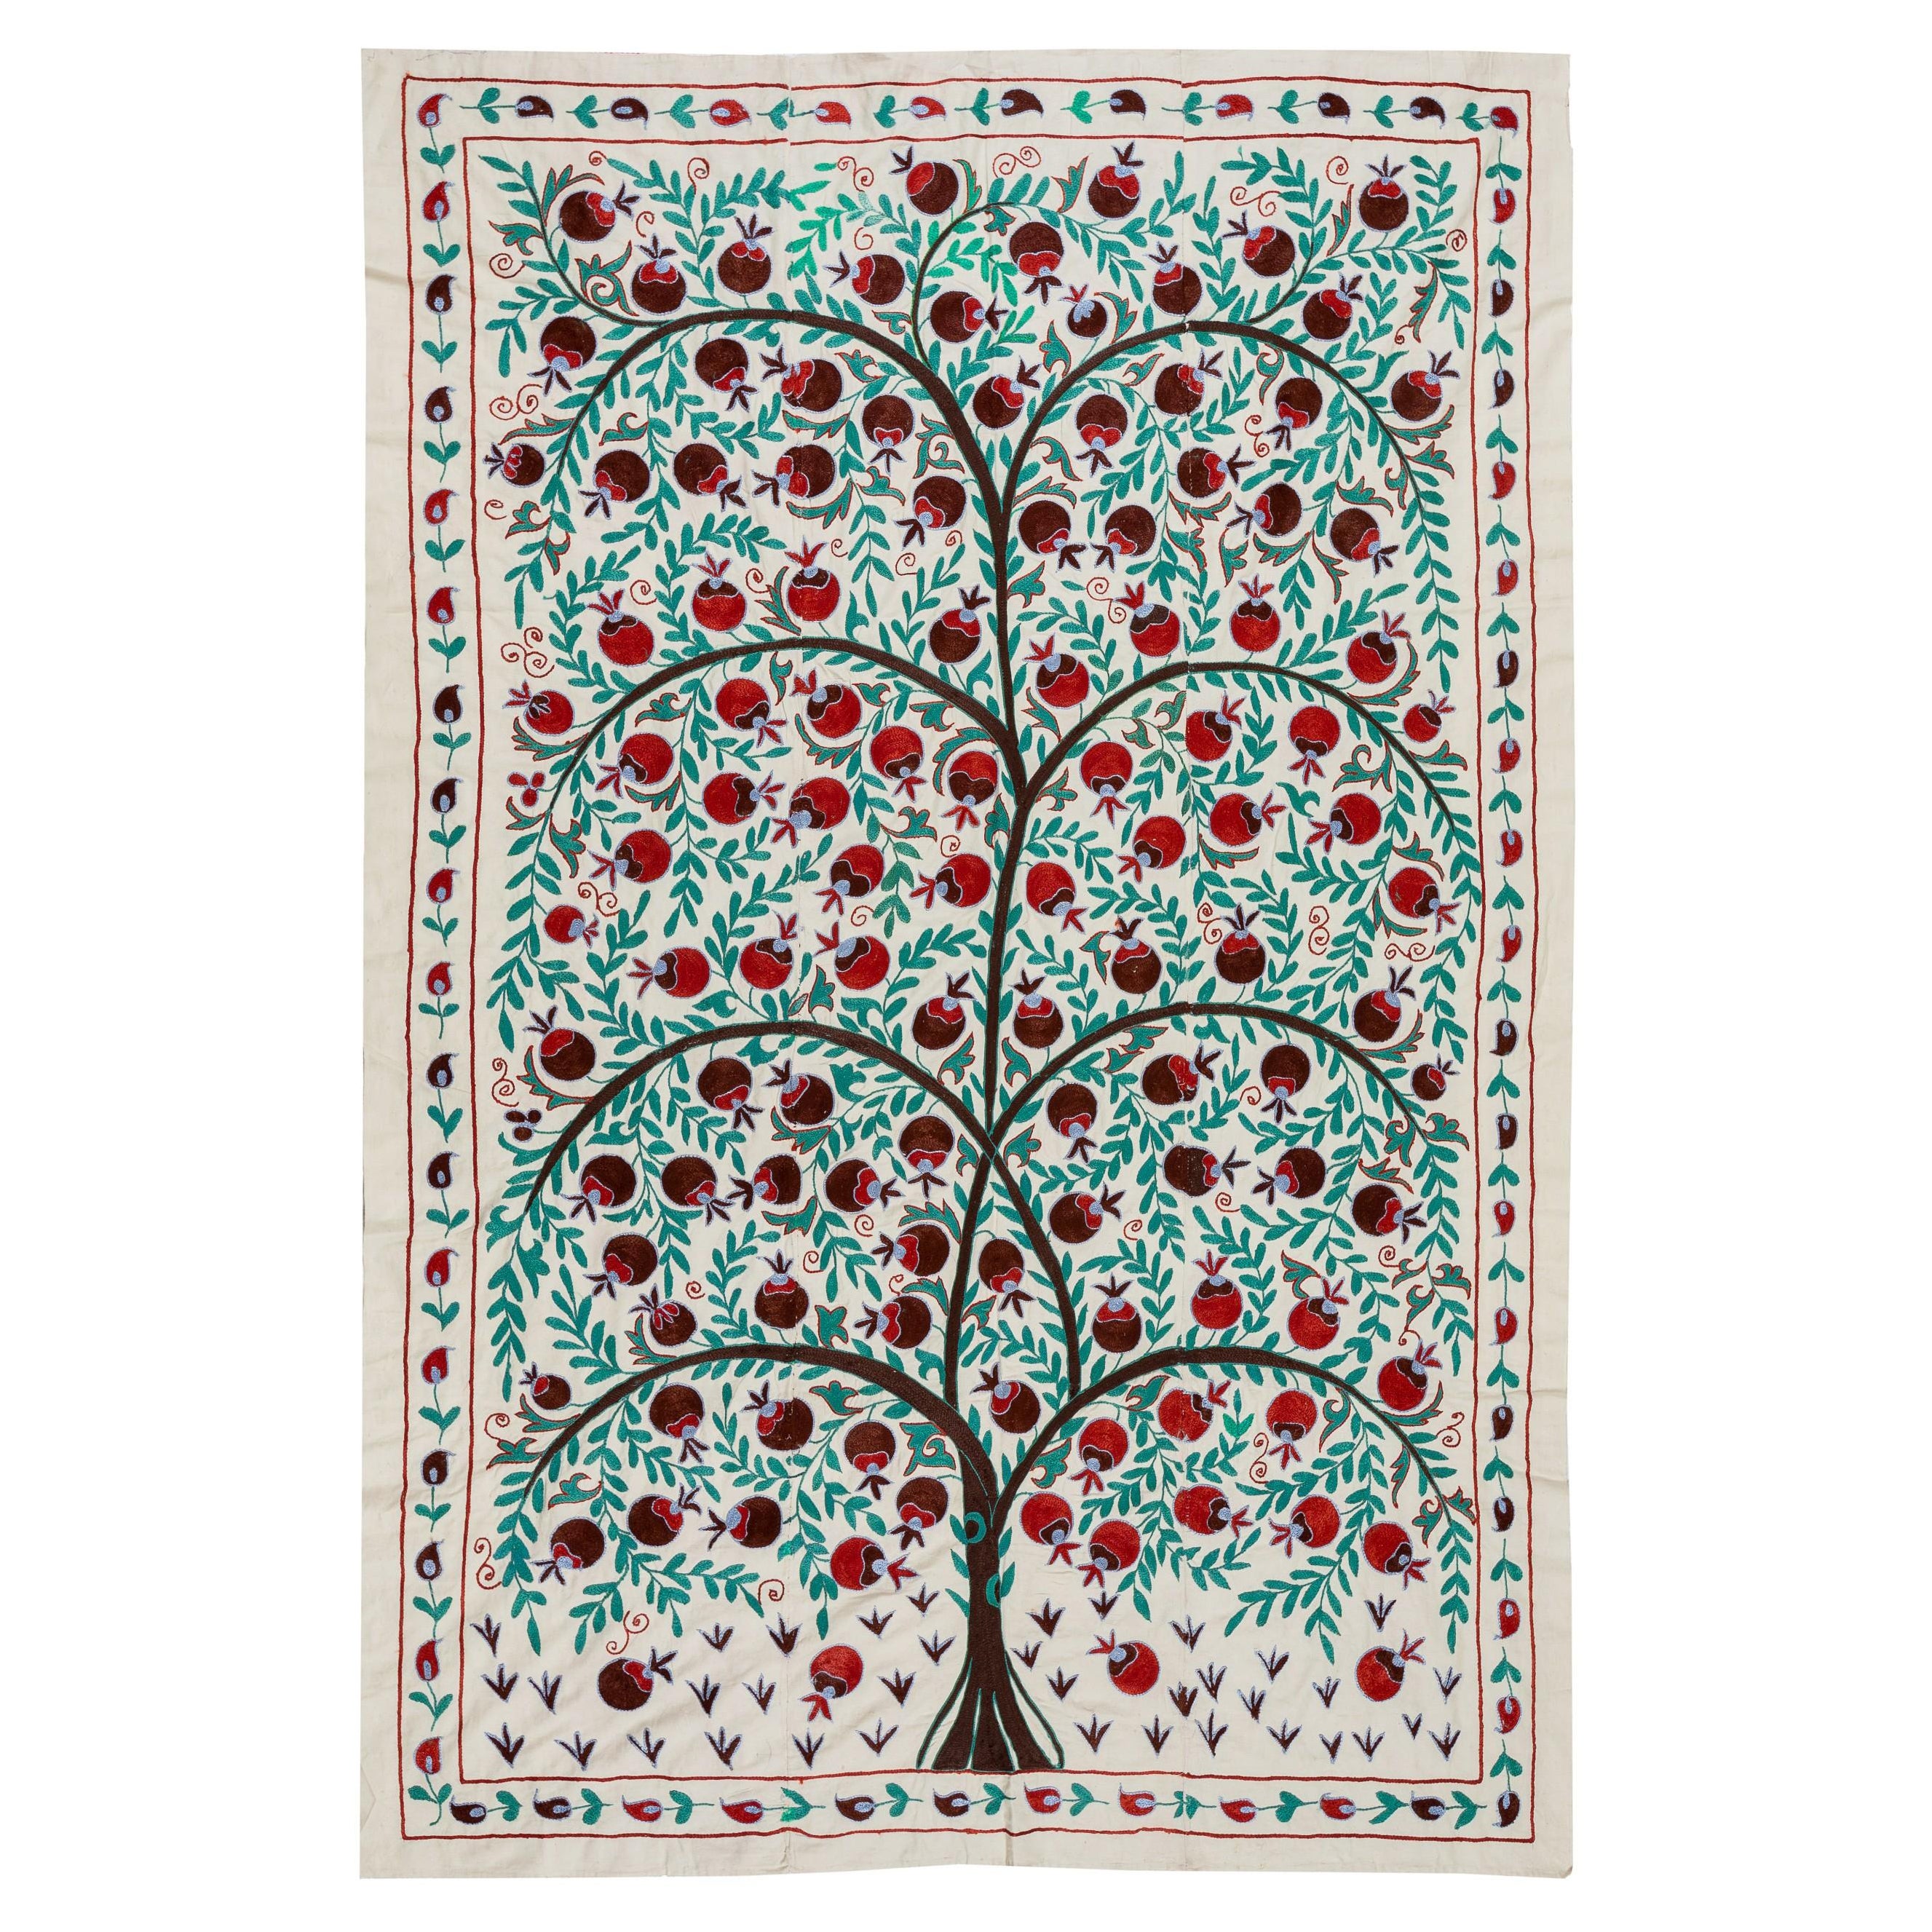 Pomegranate Tree Design Suzani Textile, Embroidered Silk Wall Hanging